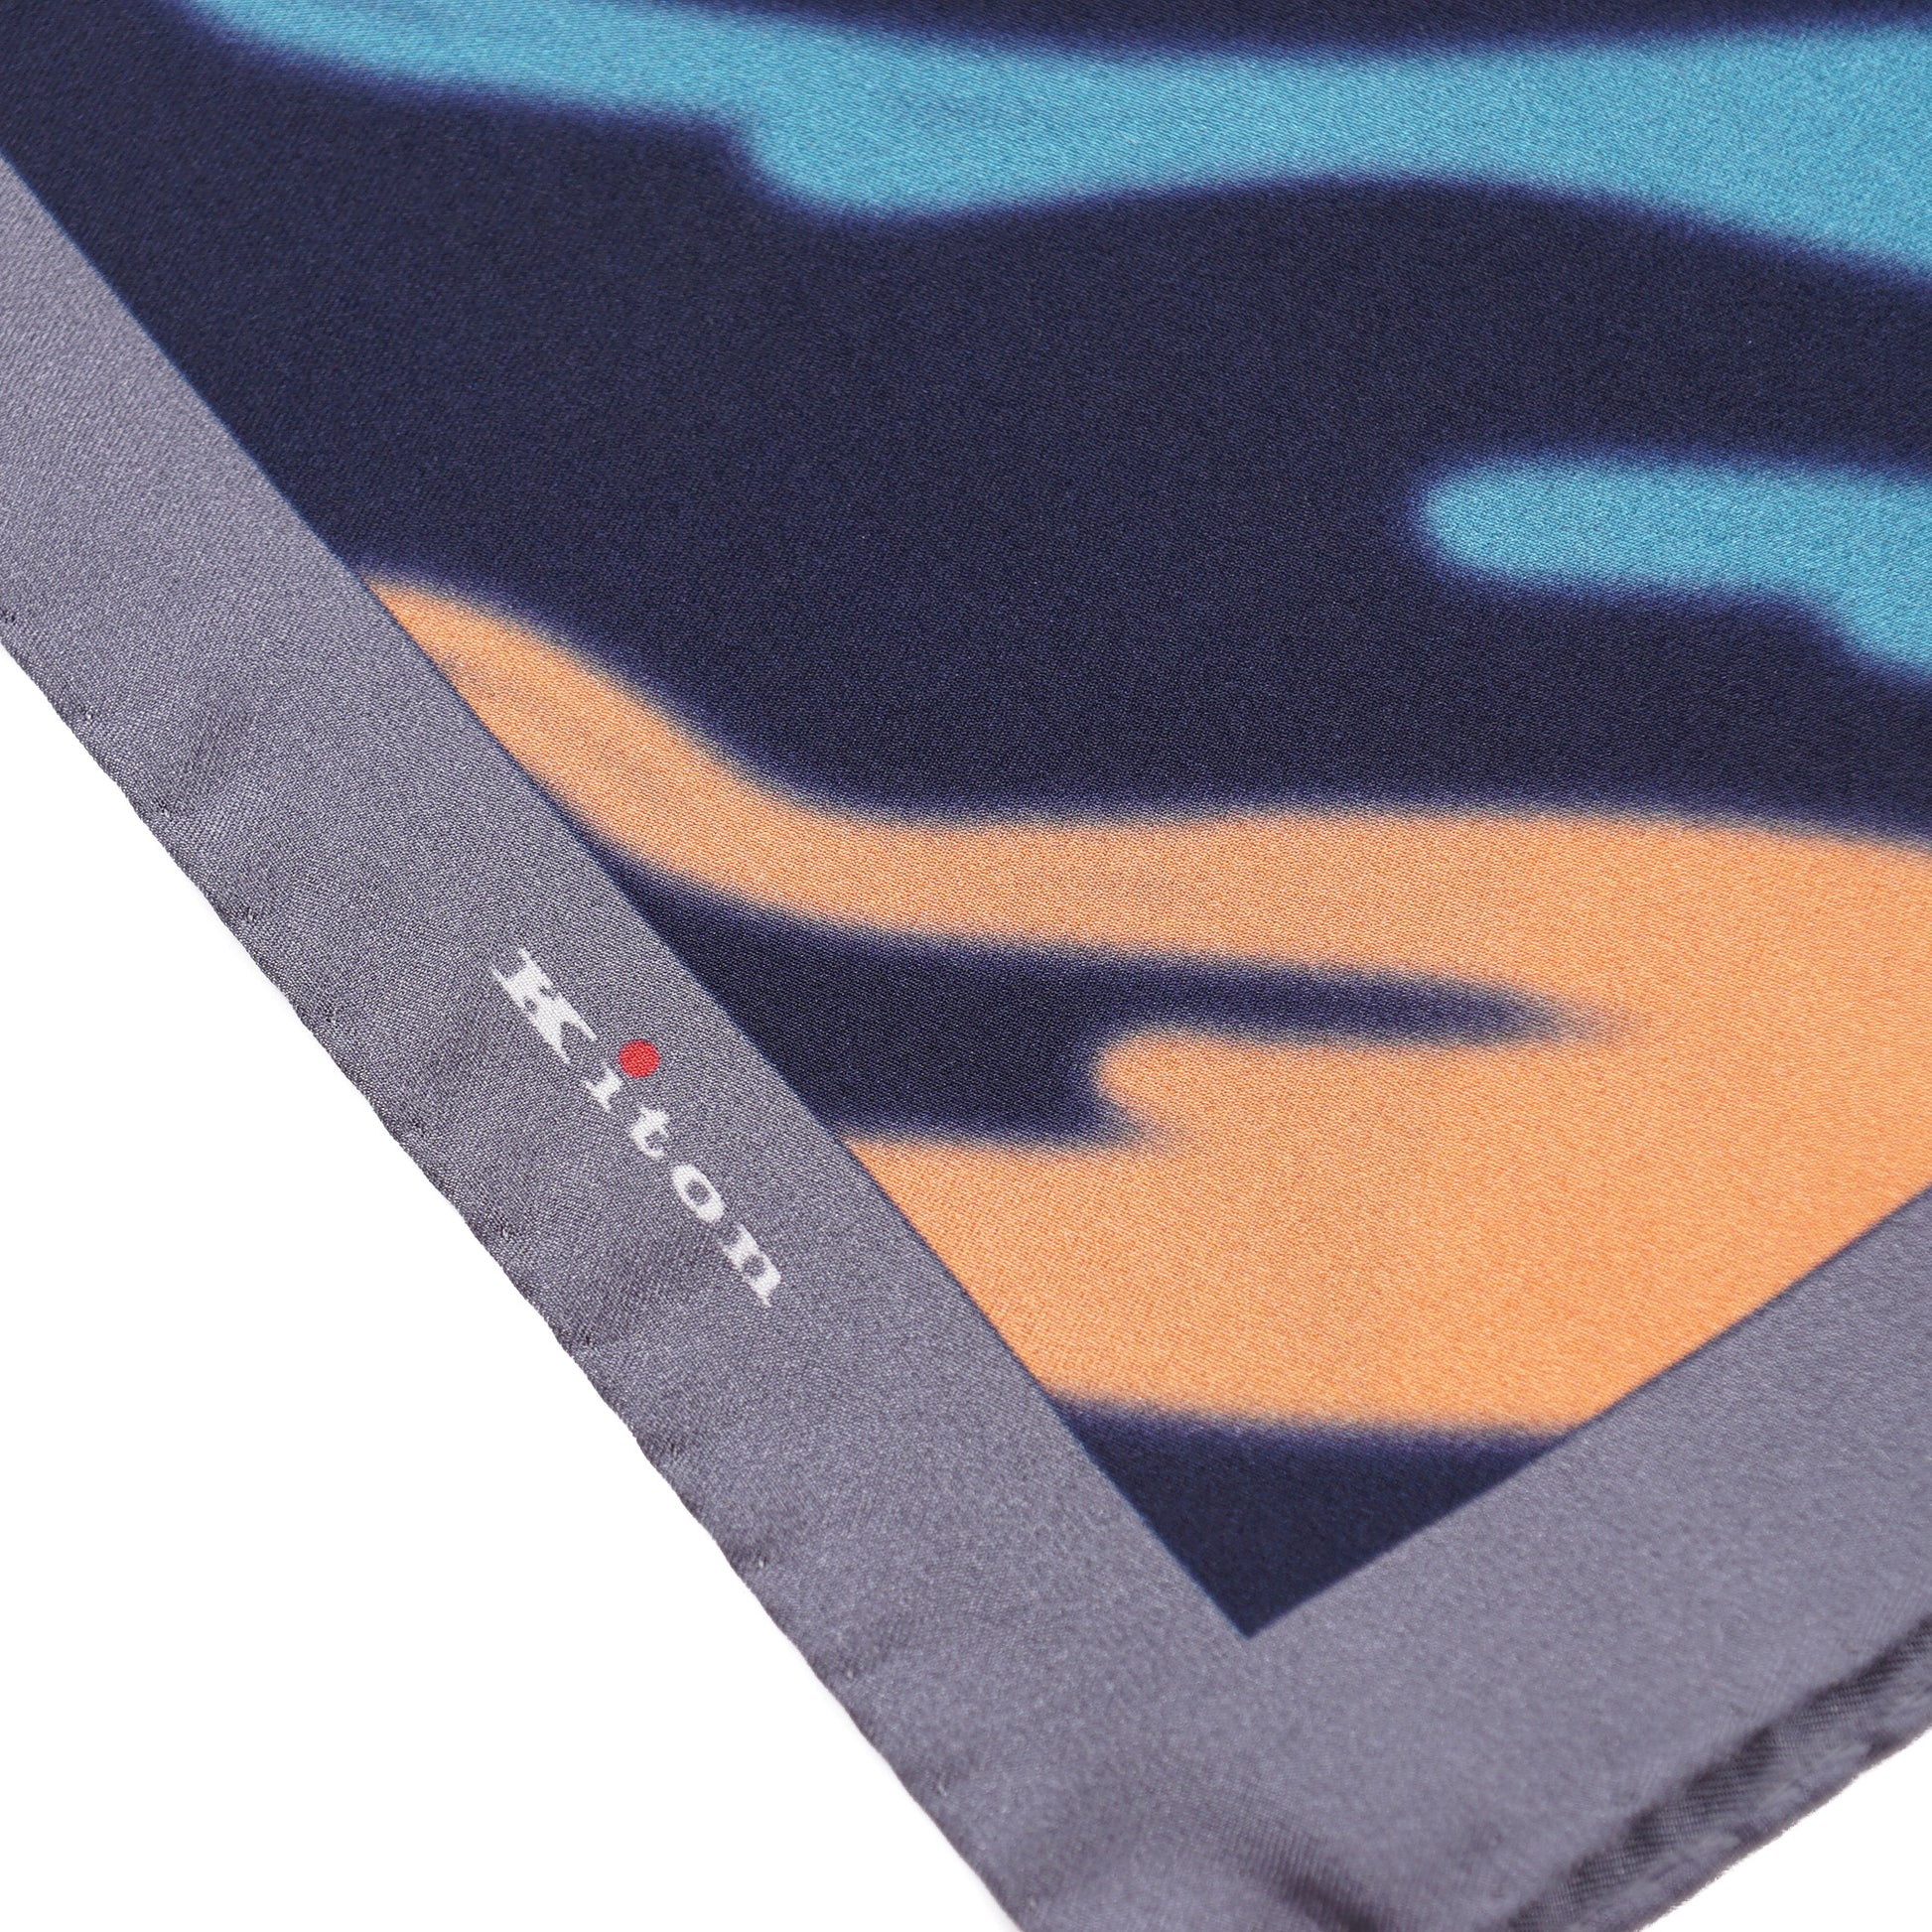 Kiton Watercolor Print Silk Pocket Square - Top Shelf Apparel